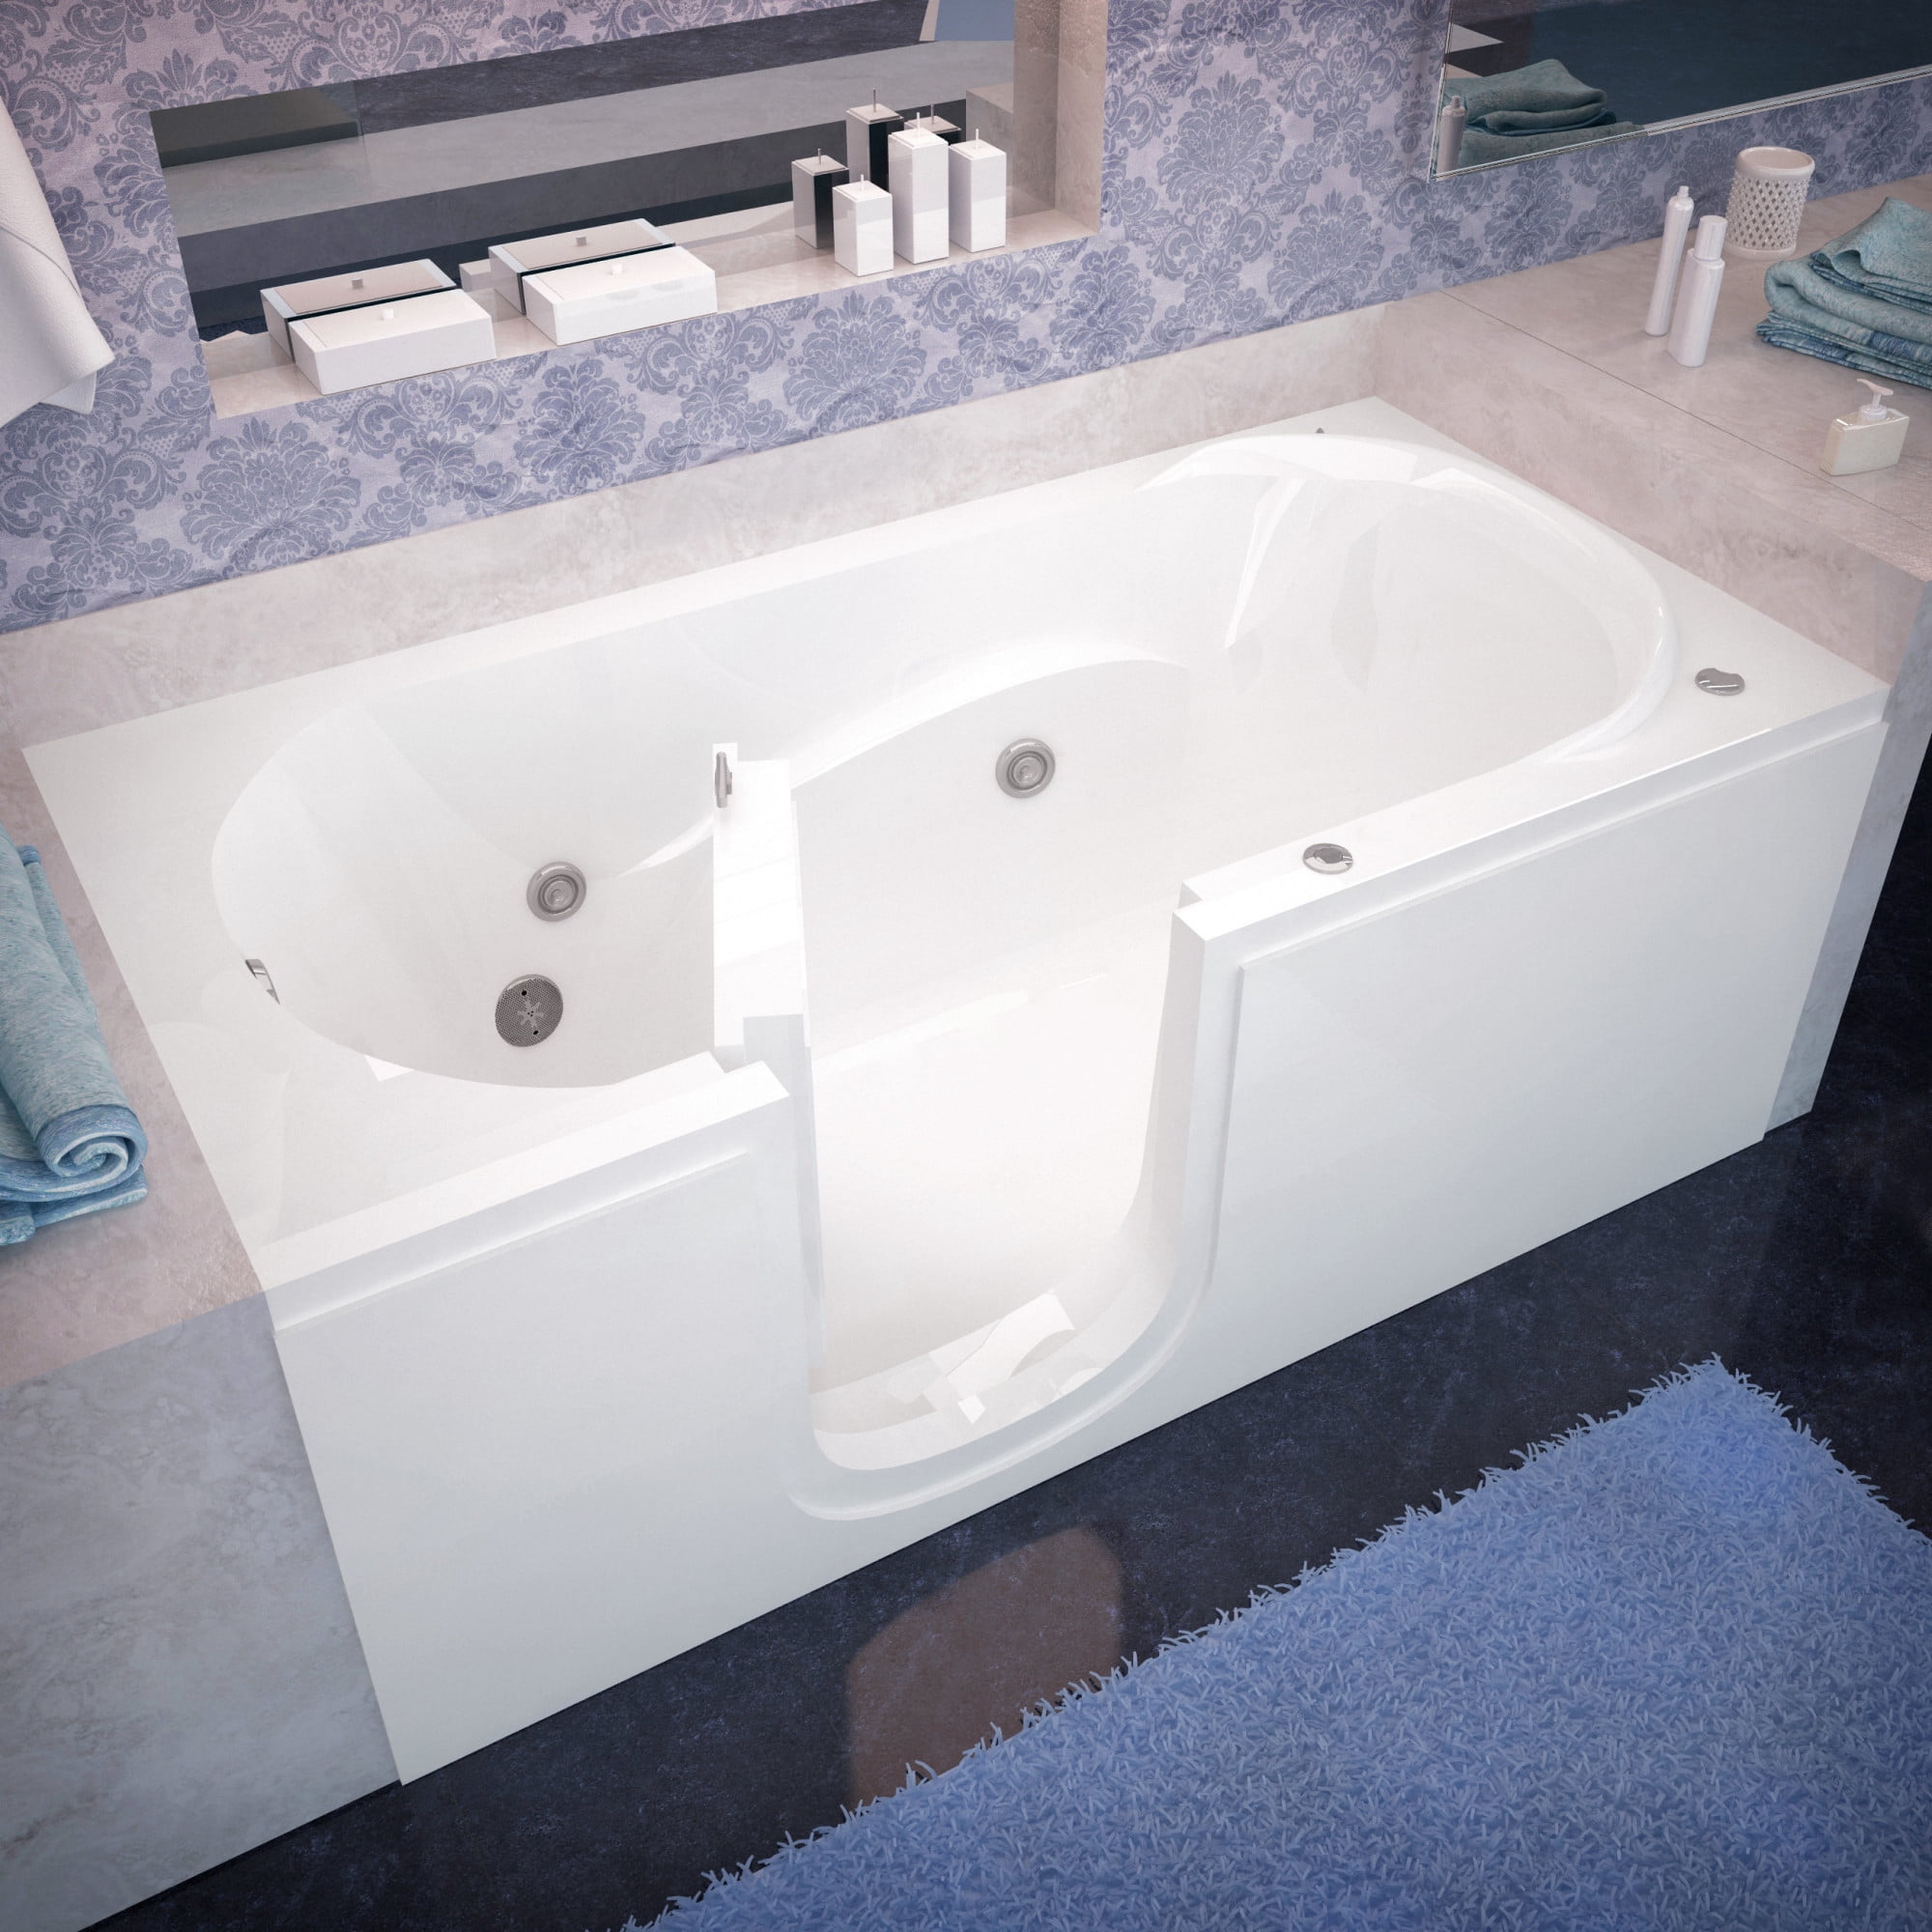 Avano Av3060silh Step In Tubs 59 5 8 Acrylic Whirlpool Bathtub For Alcove Installations With Left Drain